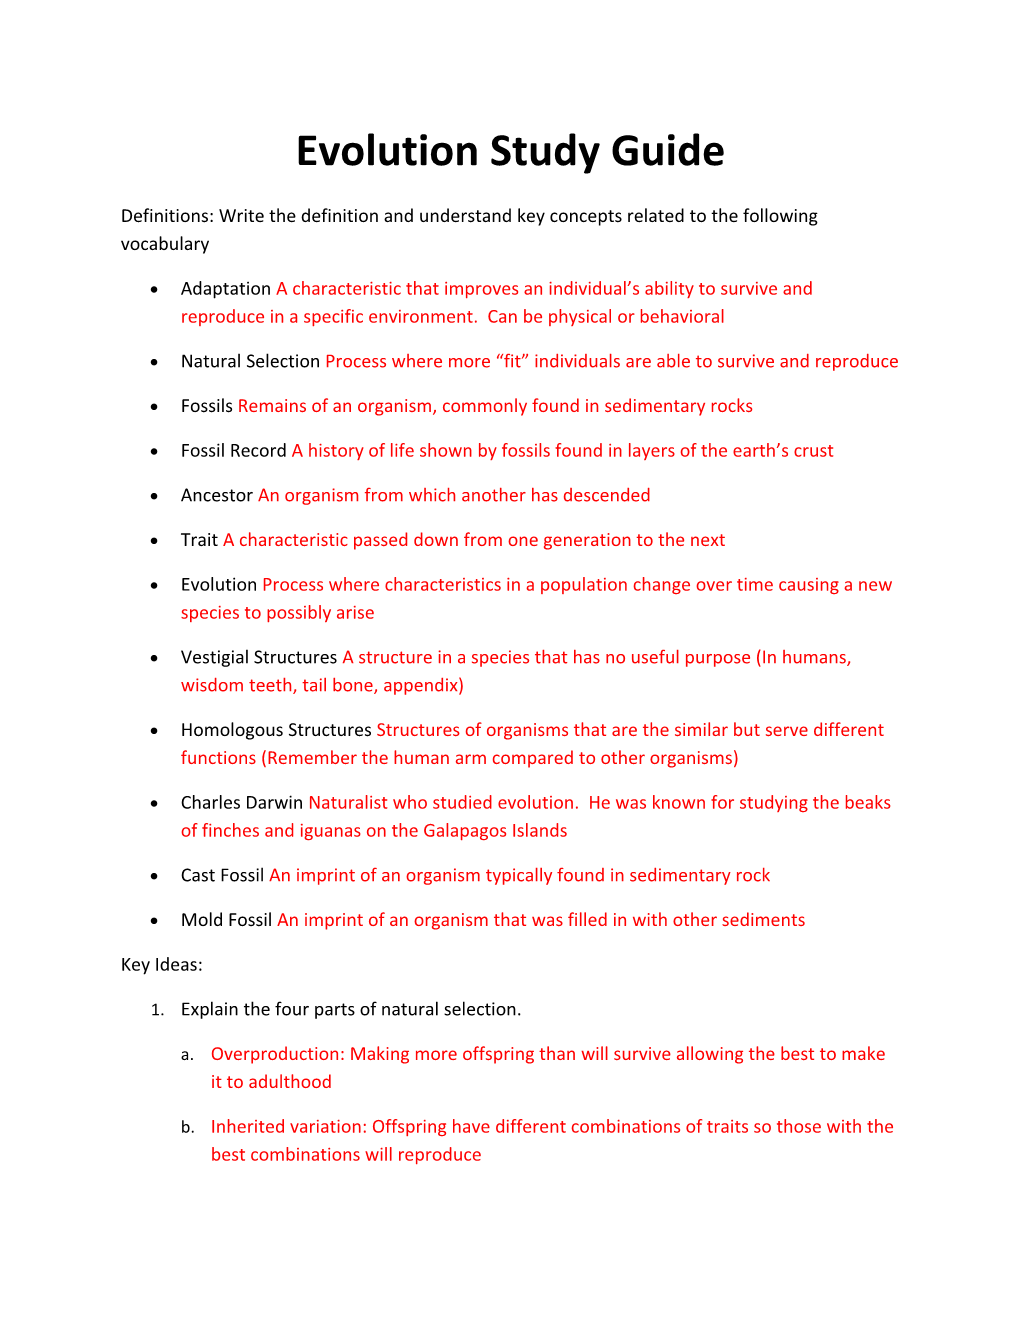 Evolution Study Guide s1